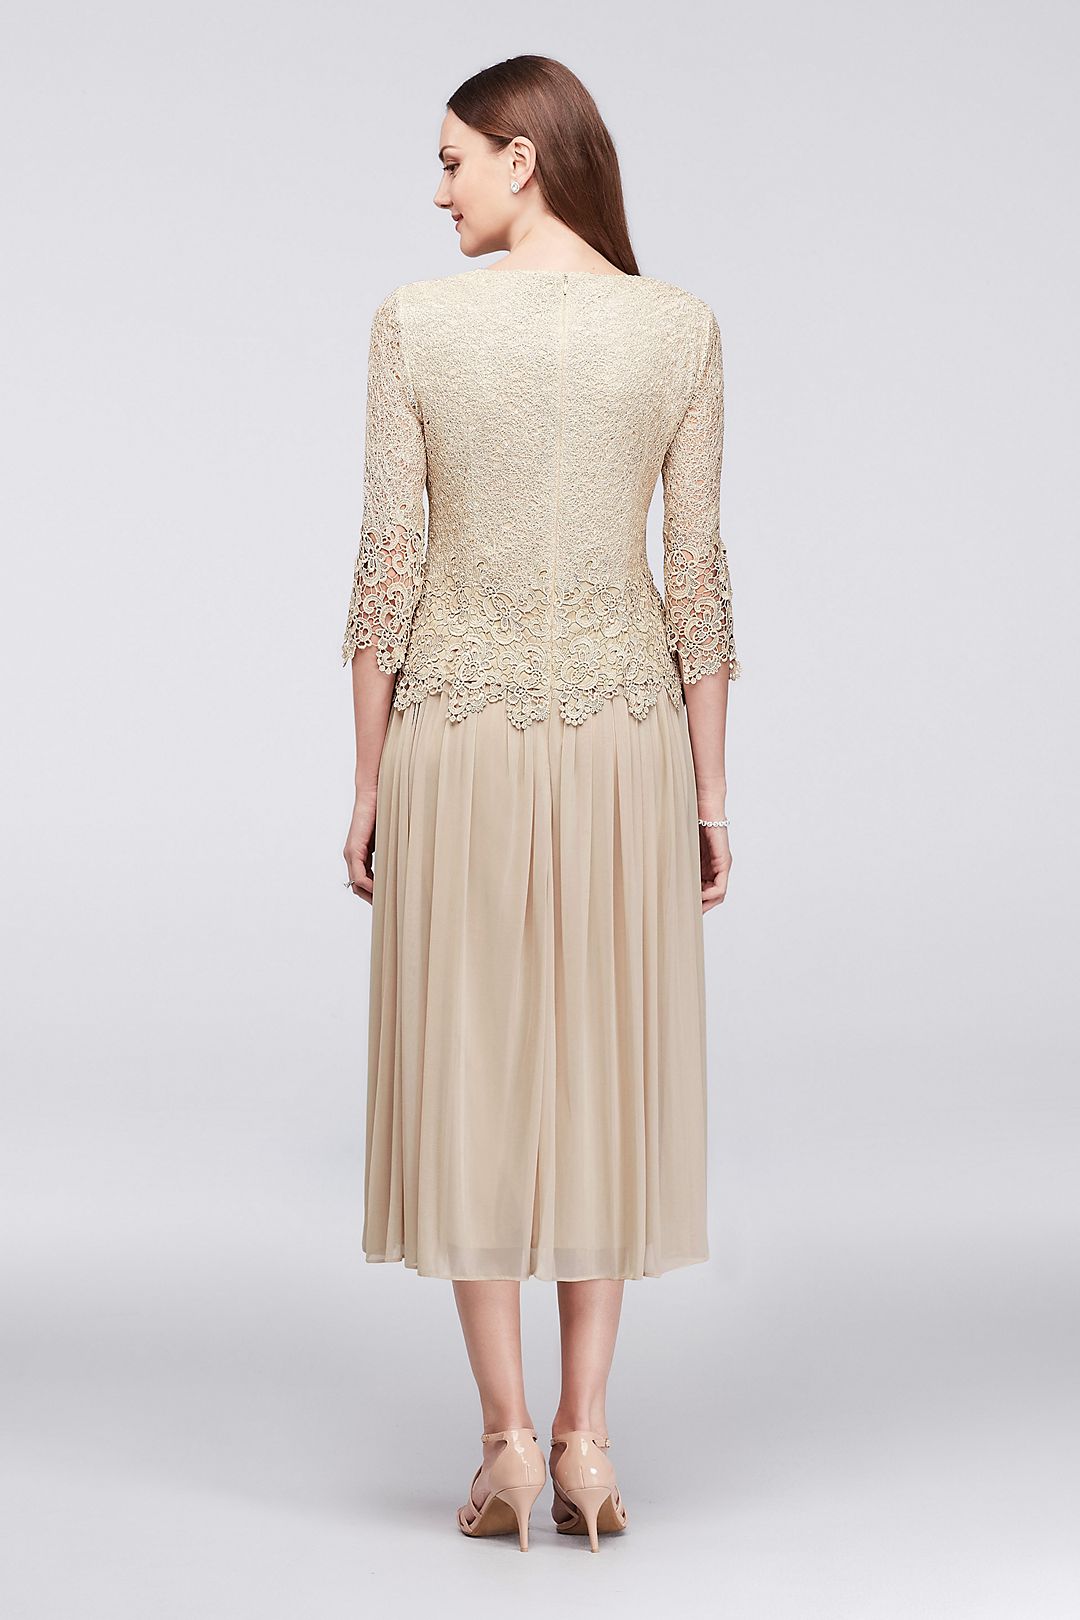 Webbed Lace and Mesh Tea-Length Dress Image 4